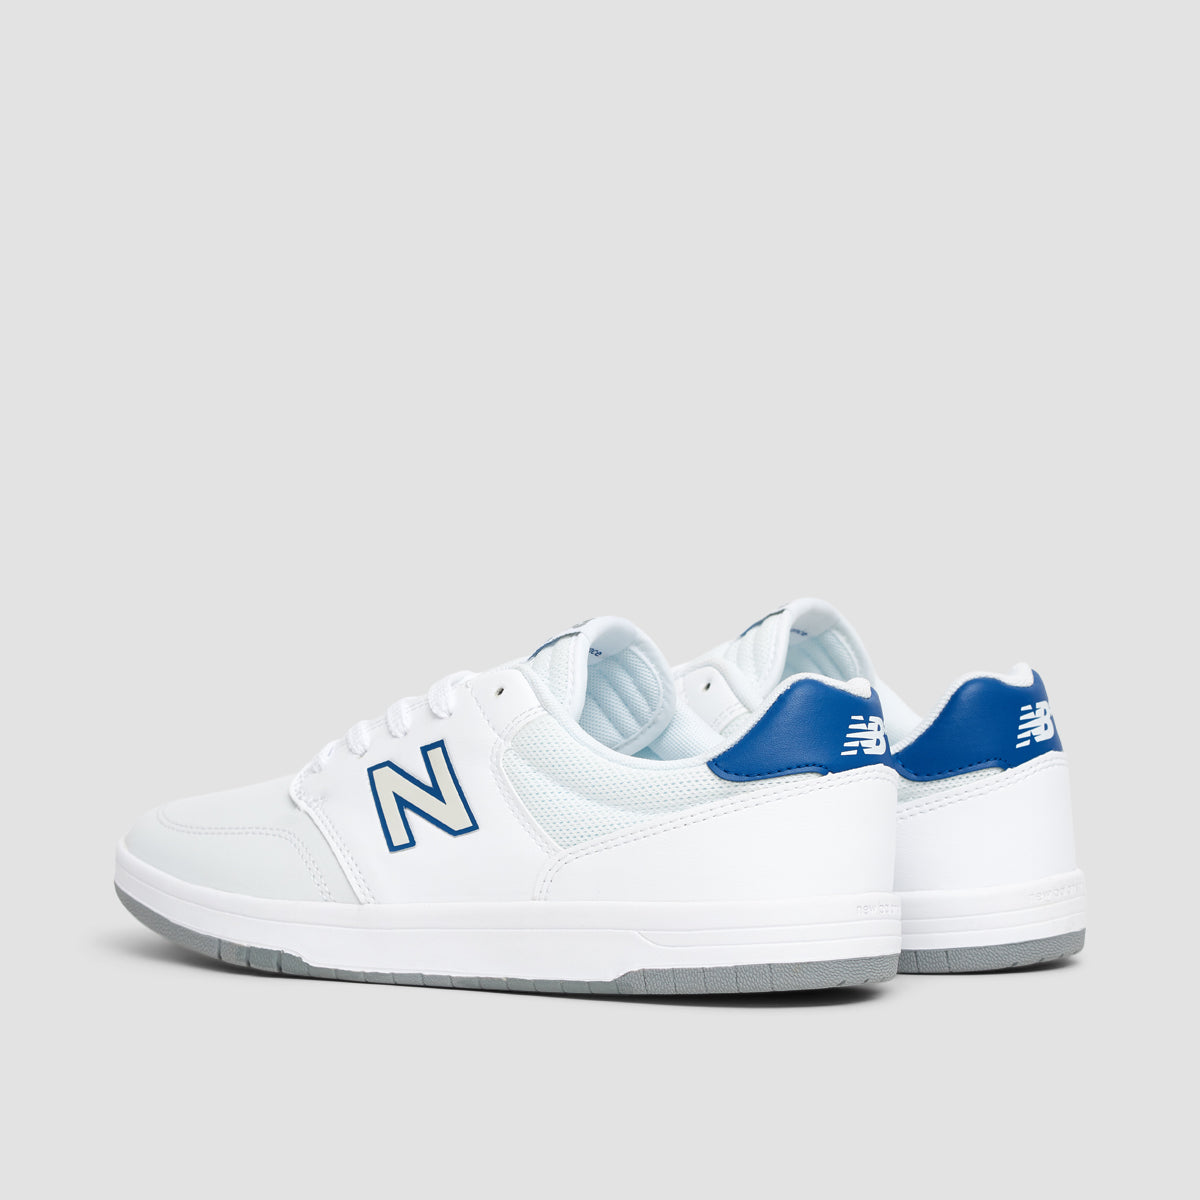 New Balance Numeric 425 Shoes - White/Royal